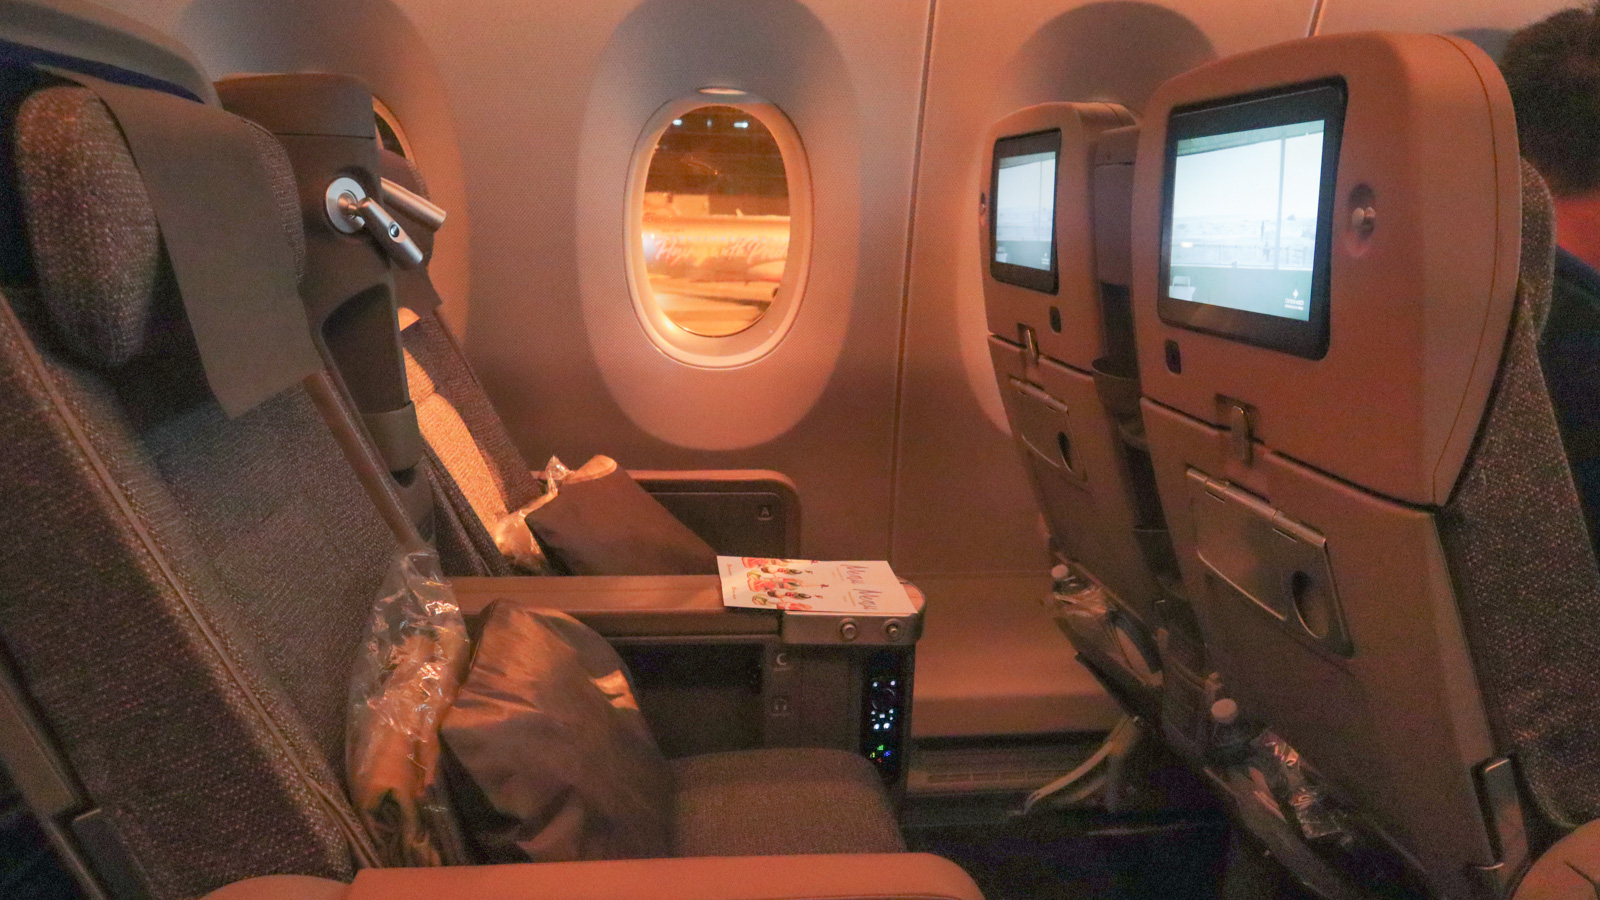 China Airlines A350 Premium Economy window seat